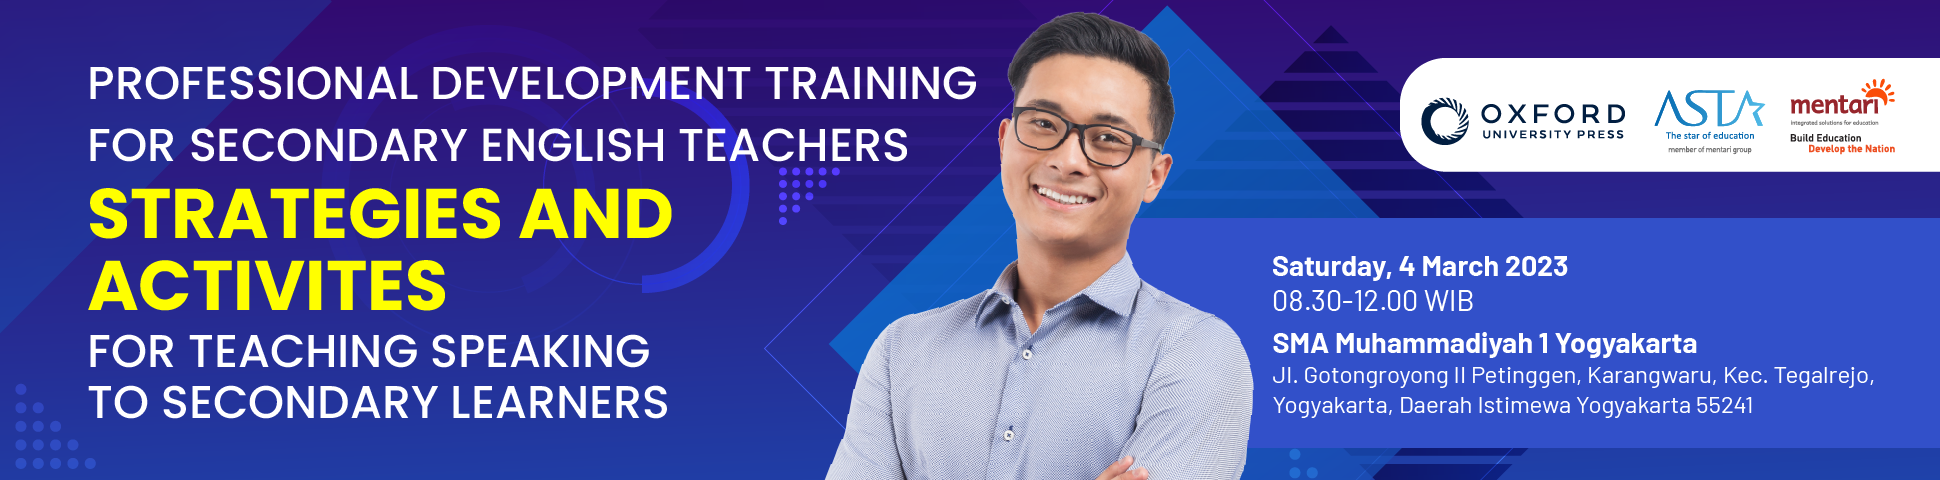 Professional Development Training for Secondary English Teachers - YOGYAKARTA